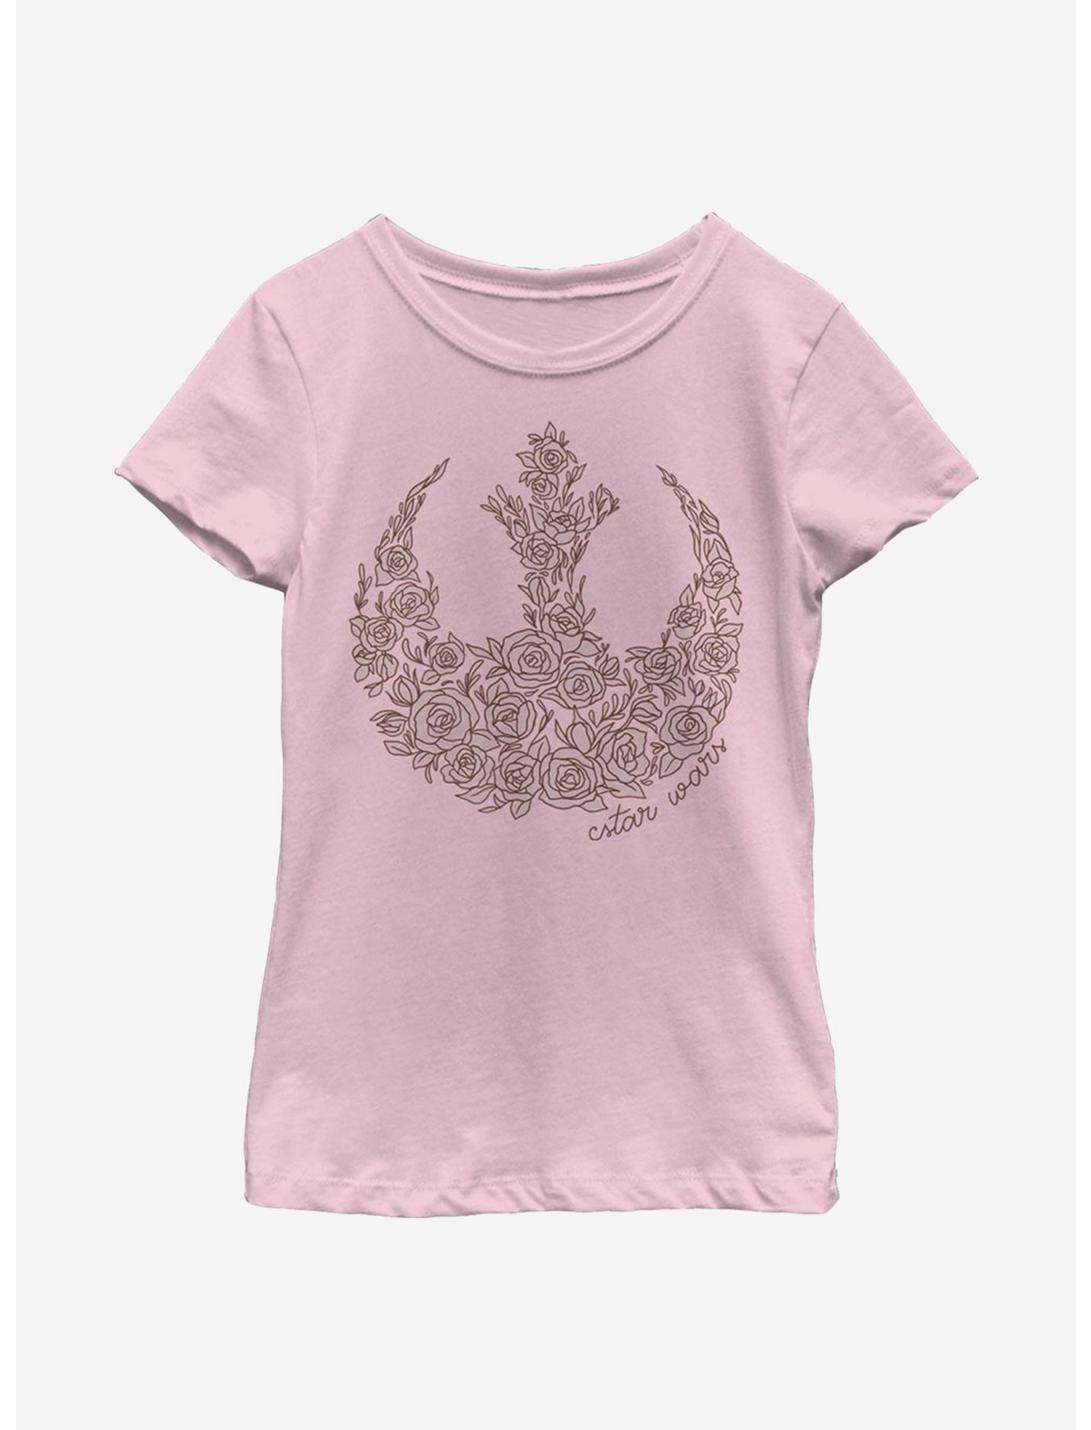 Star Wars Rose Rebel Youth Girl T-Shirt, PINK, hi-res